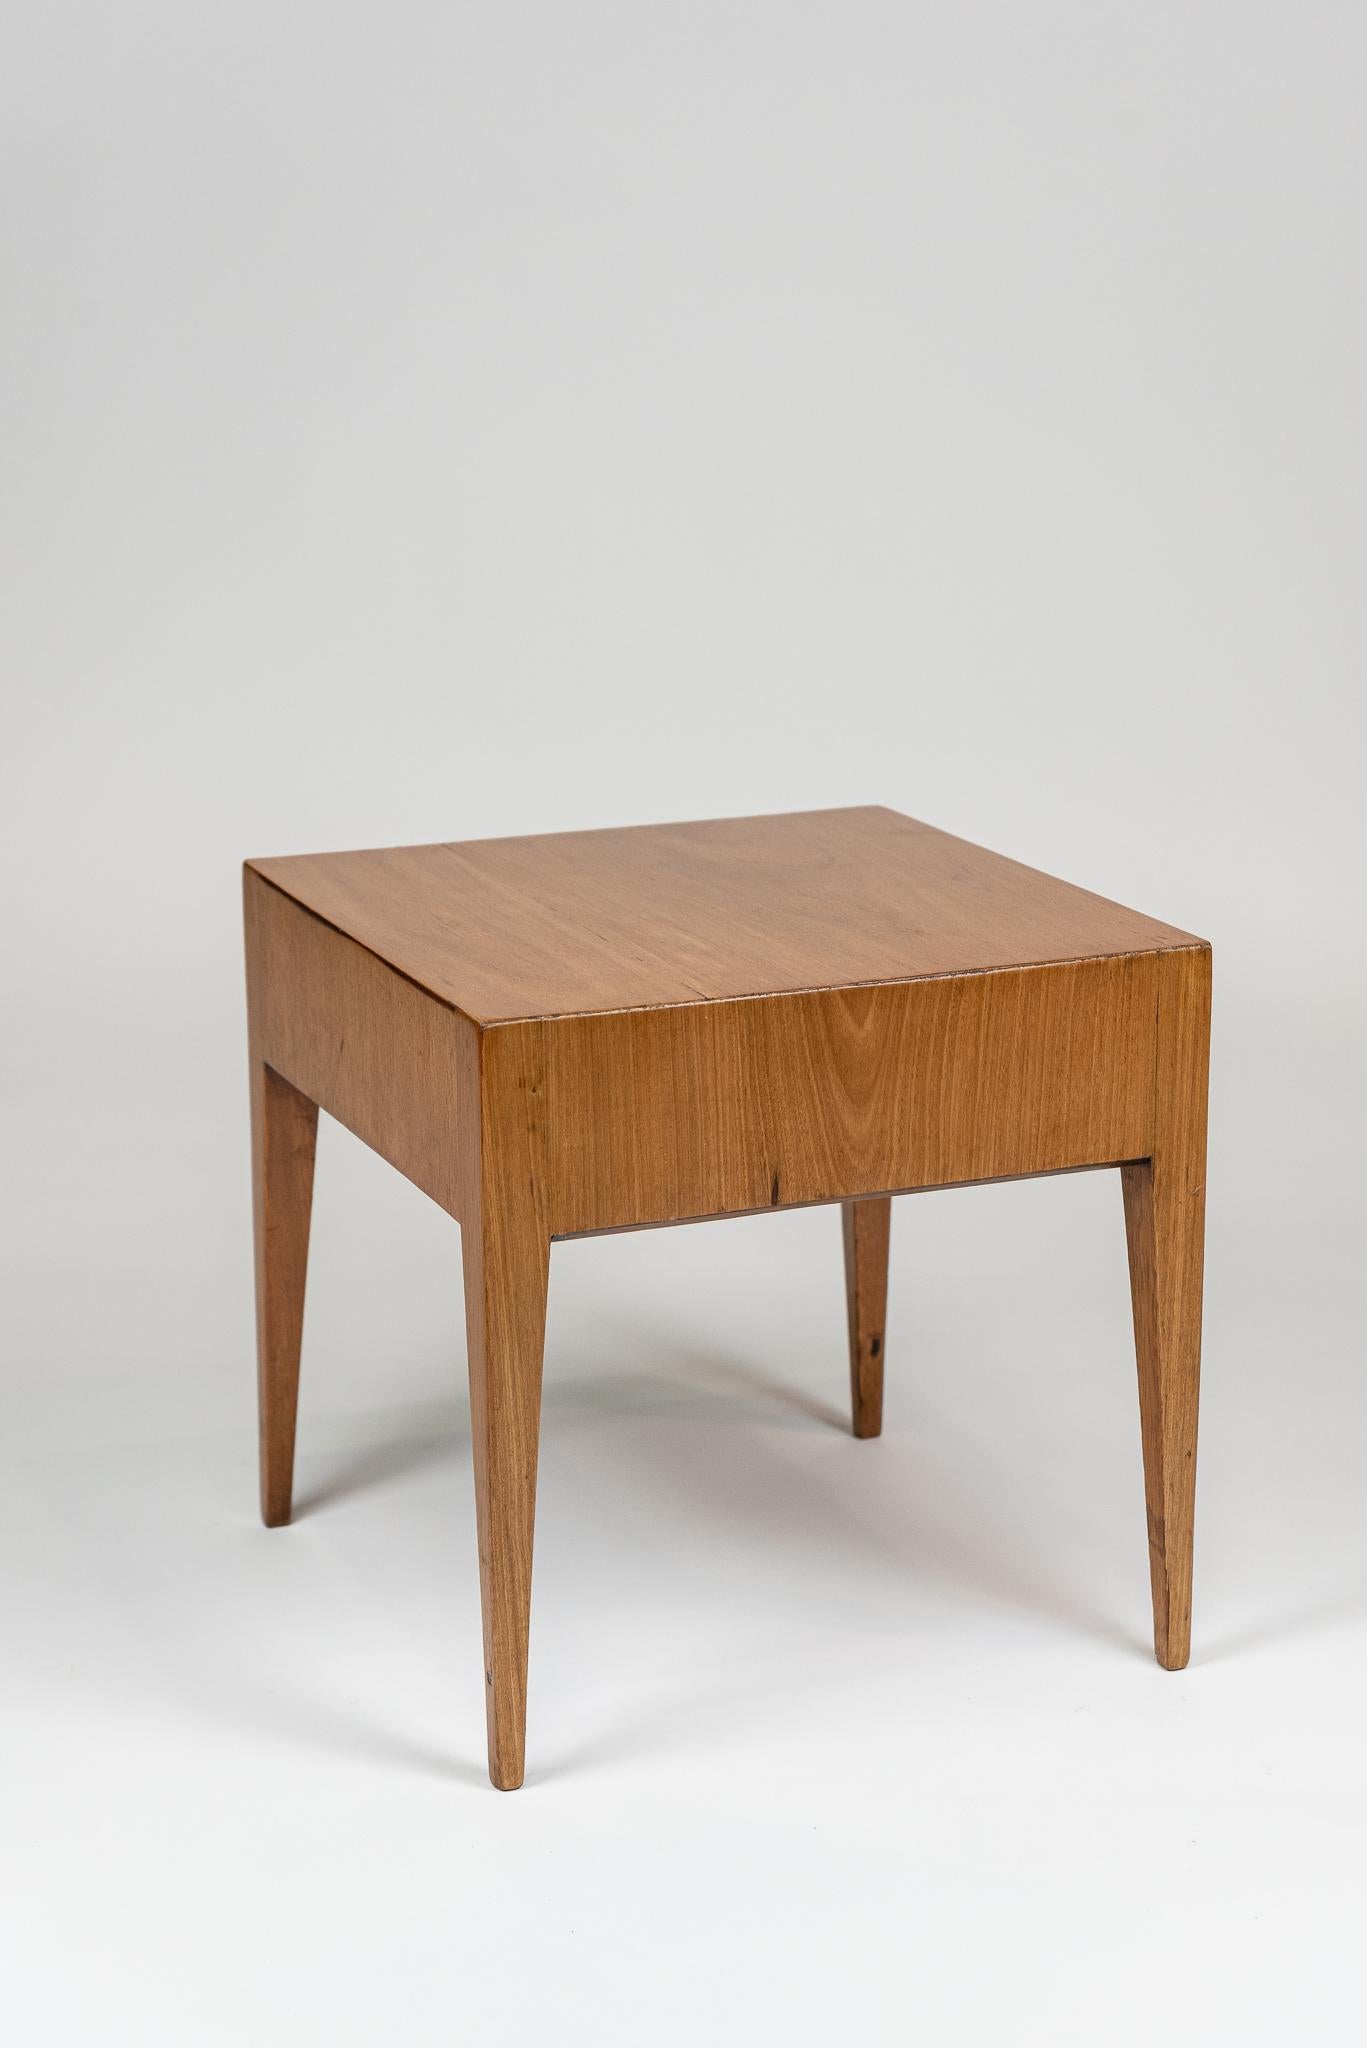 Wood Joaquim Tenreiro, Bedside Table, 1947 For Sale